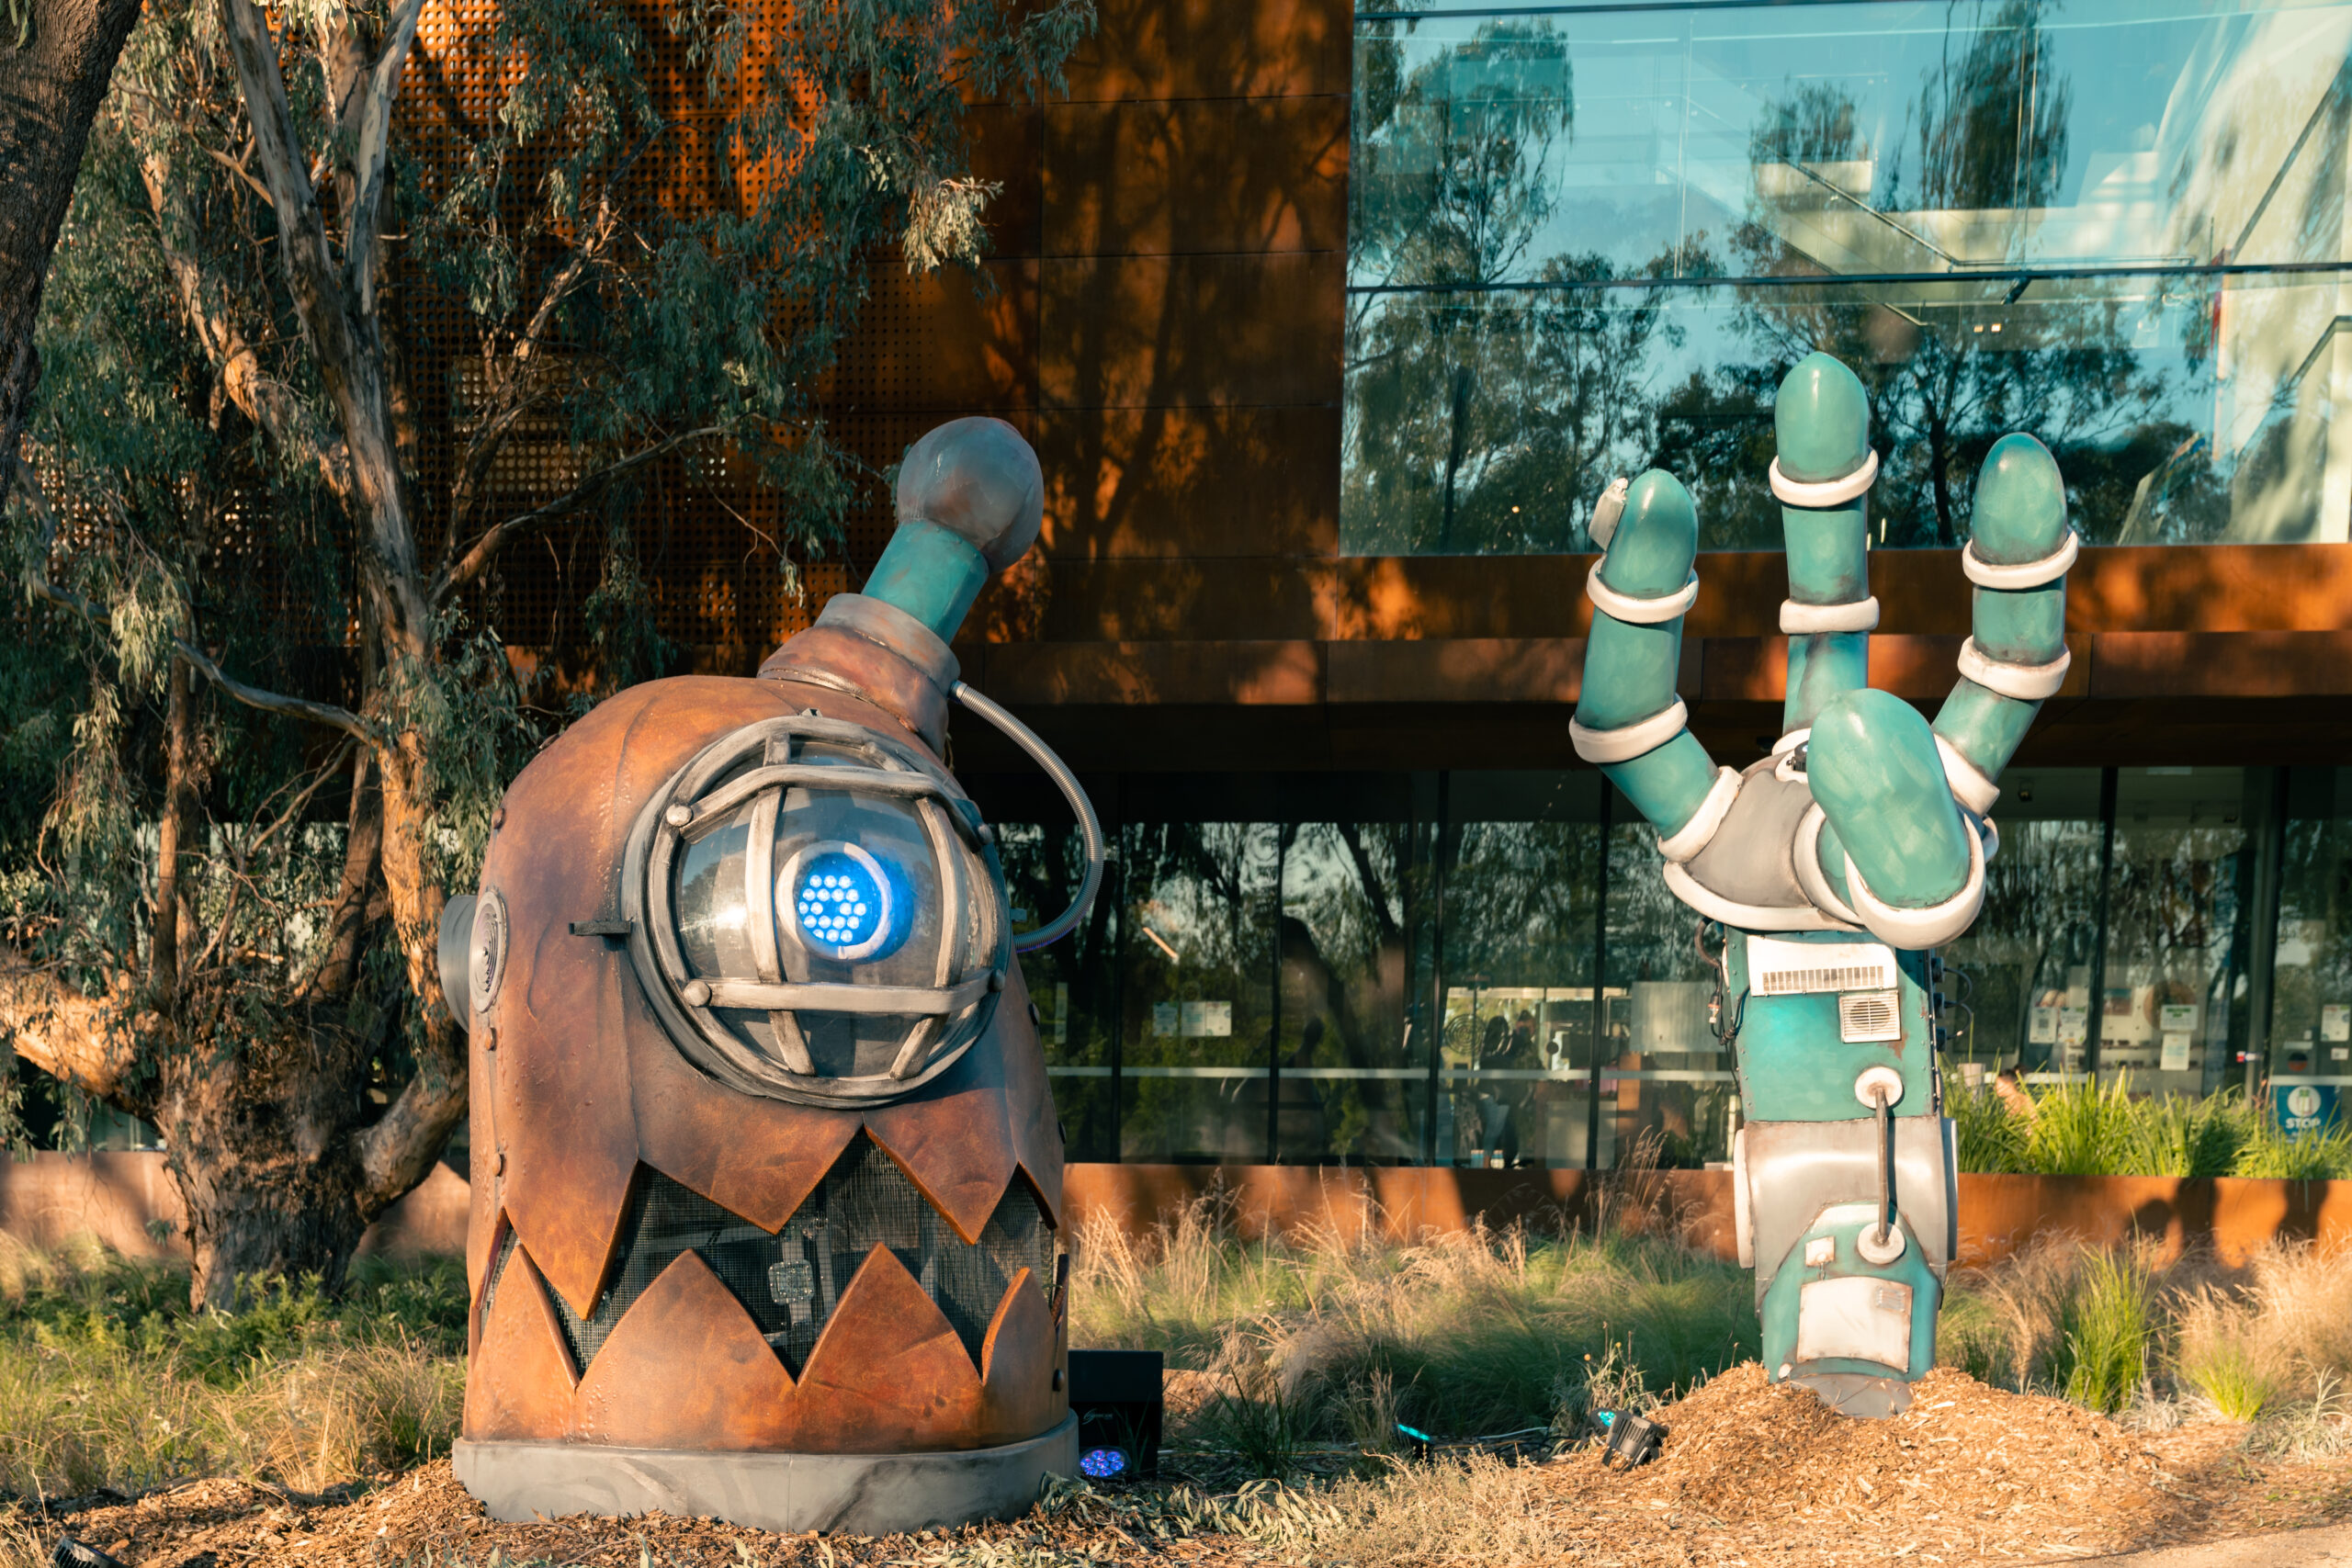 Robot Garden at Illuminate Festival Adelaide